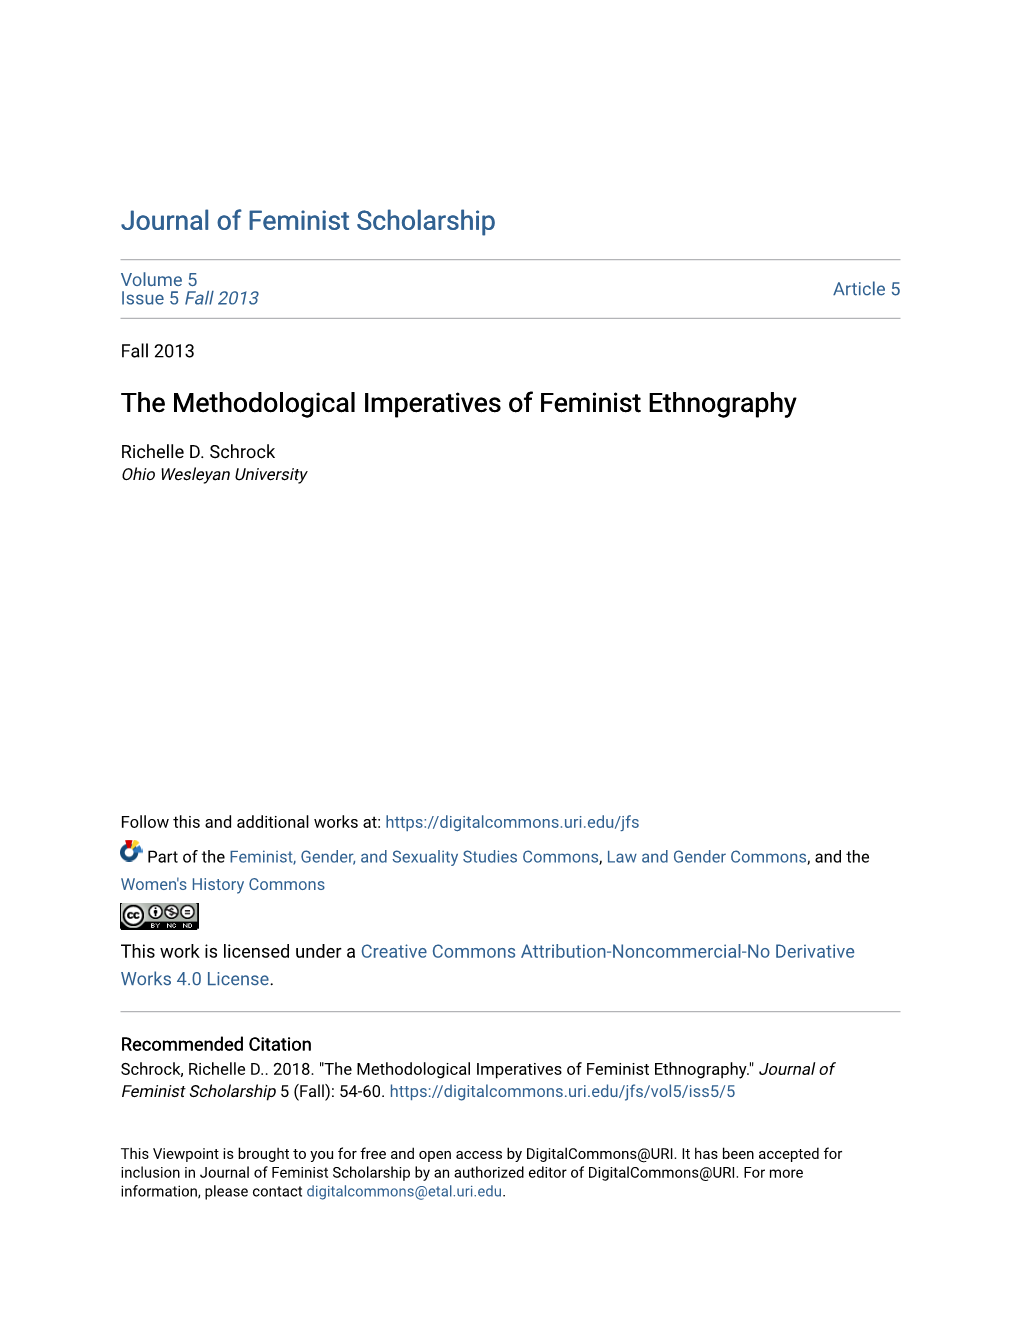 The Methodological Imperatives of Feminist Ethnography